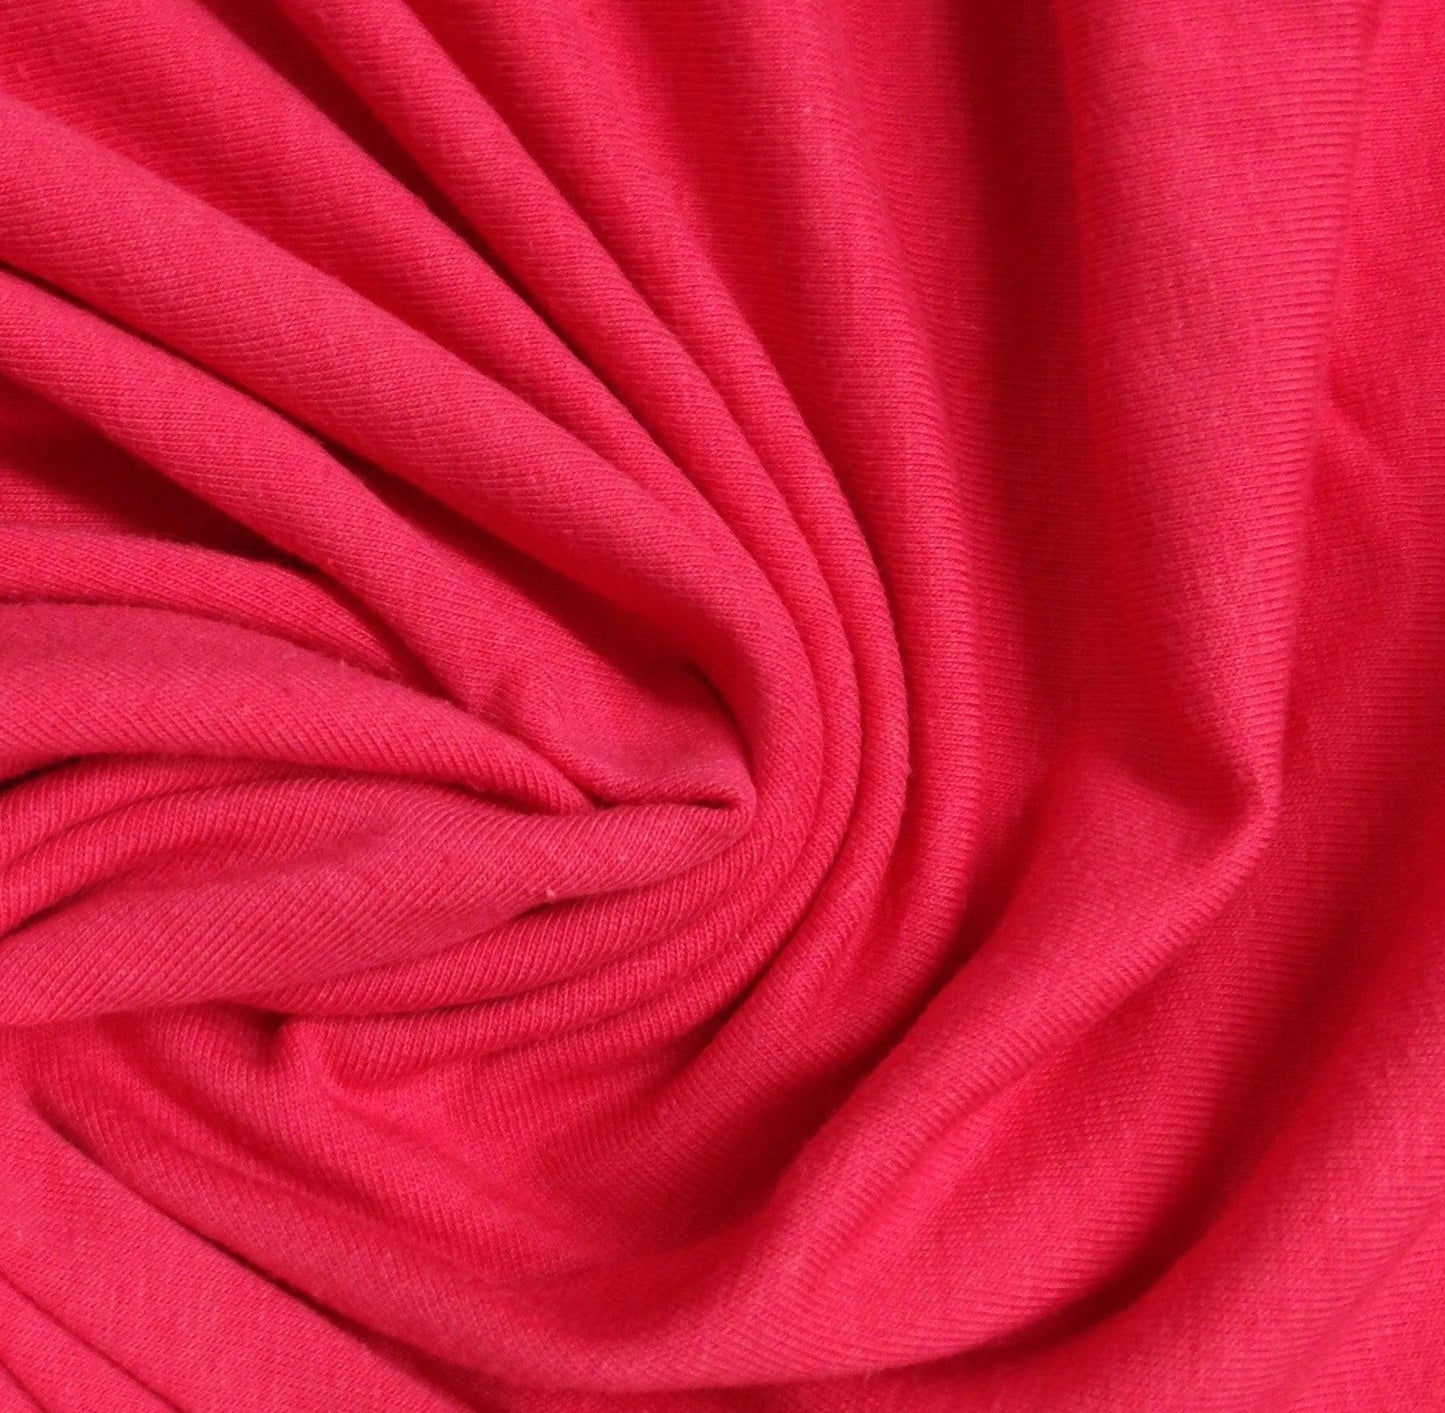 Hot Pink Cotton/Spandex Jersey 